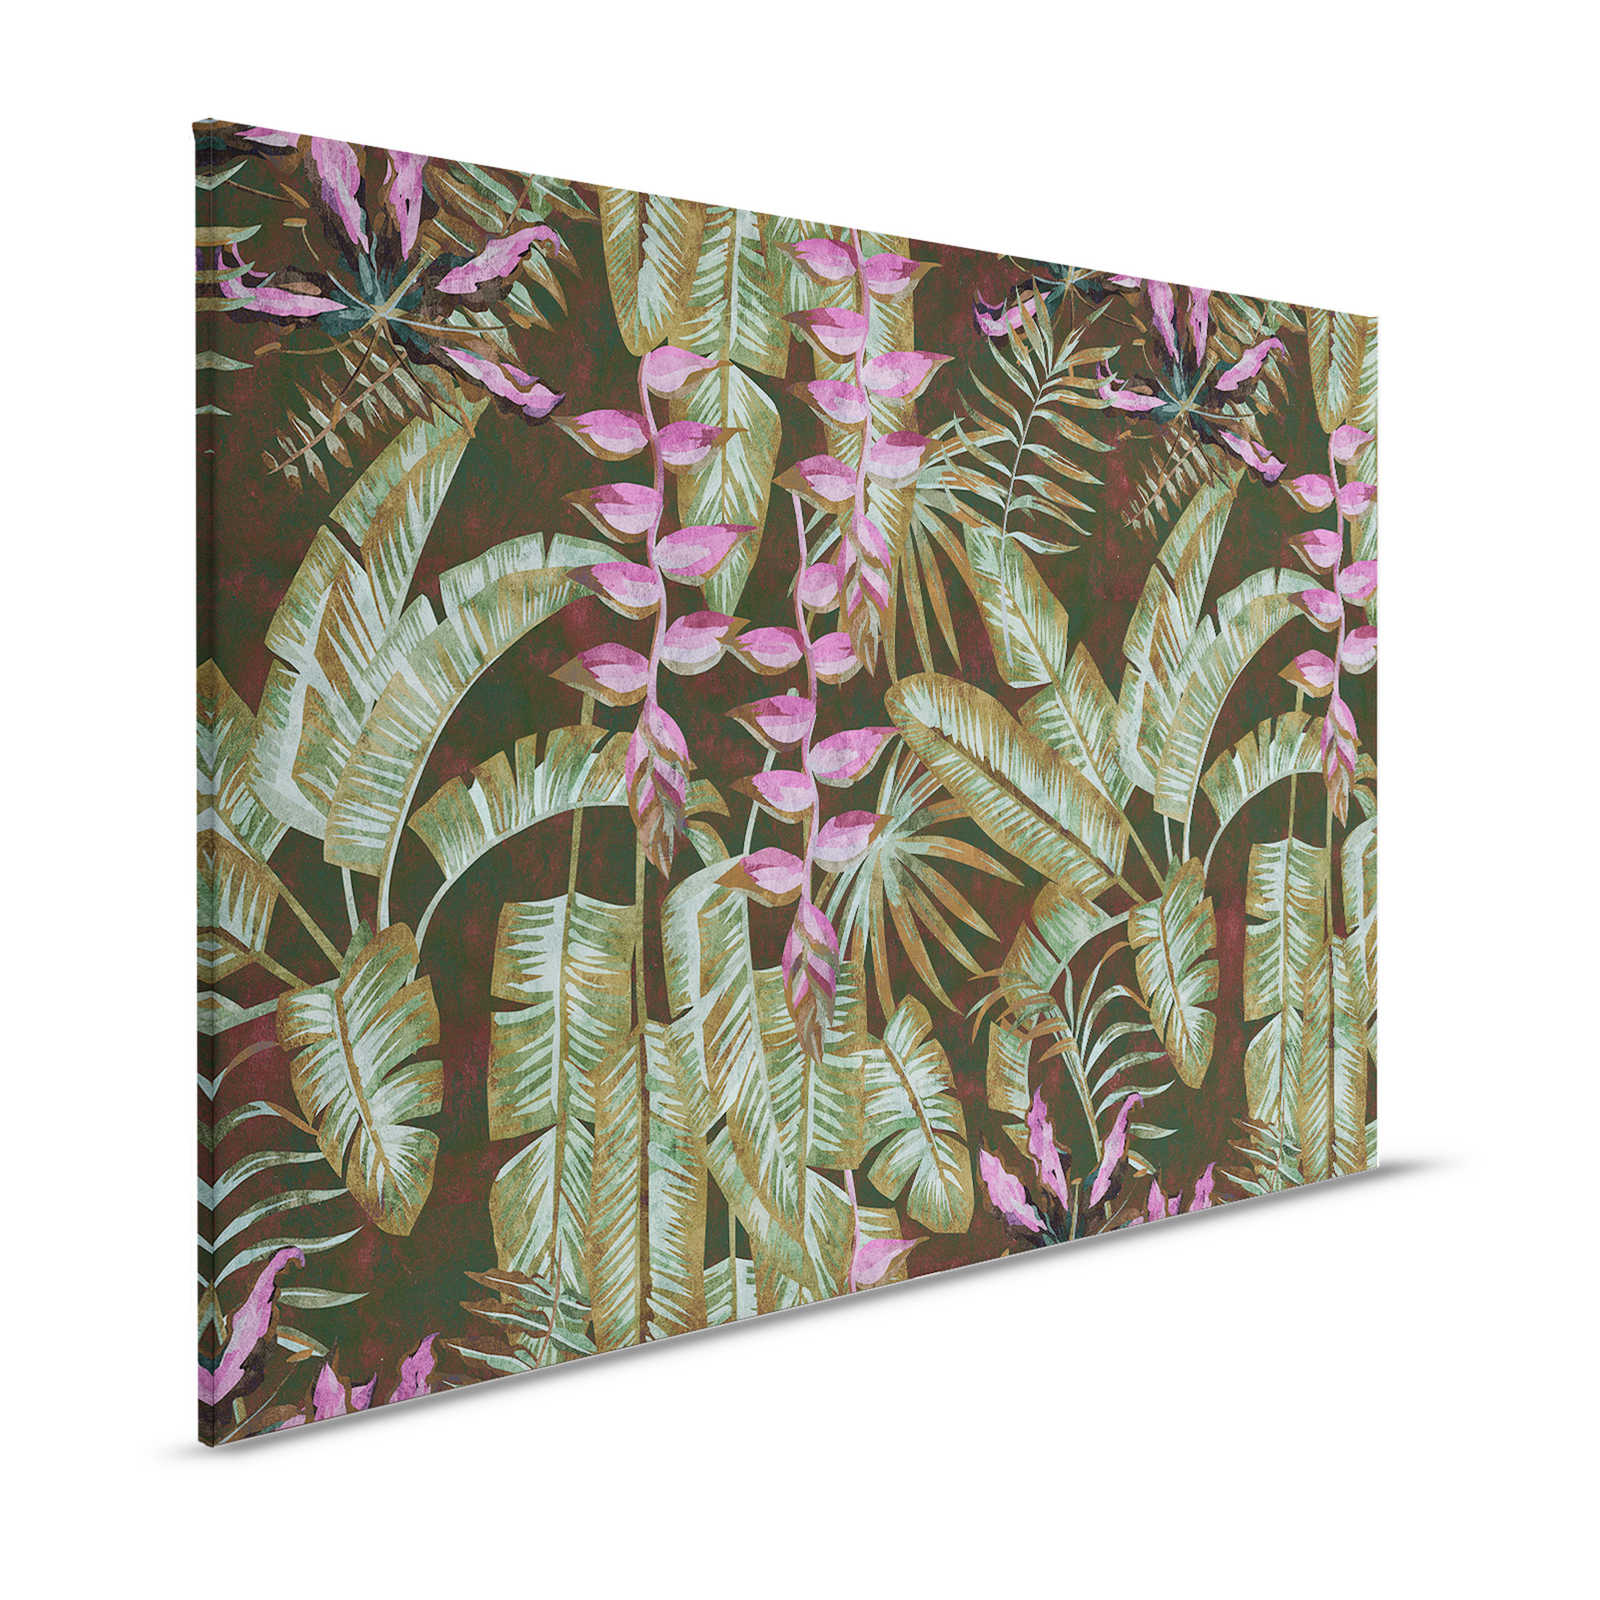 Tropicana 1 - Dschungel Leinwandbild mit Bananenblättern & Farnen – 1,20 m x 0,80 m
